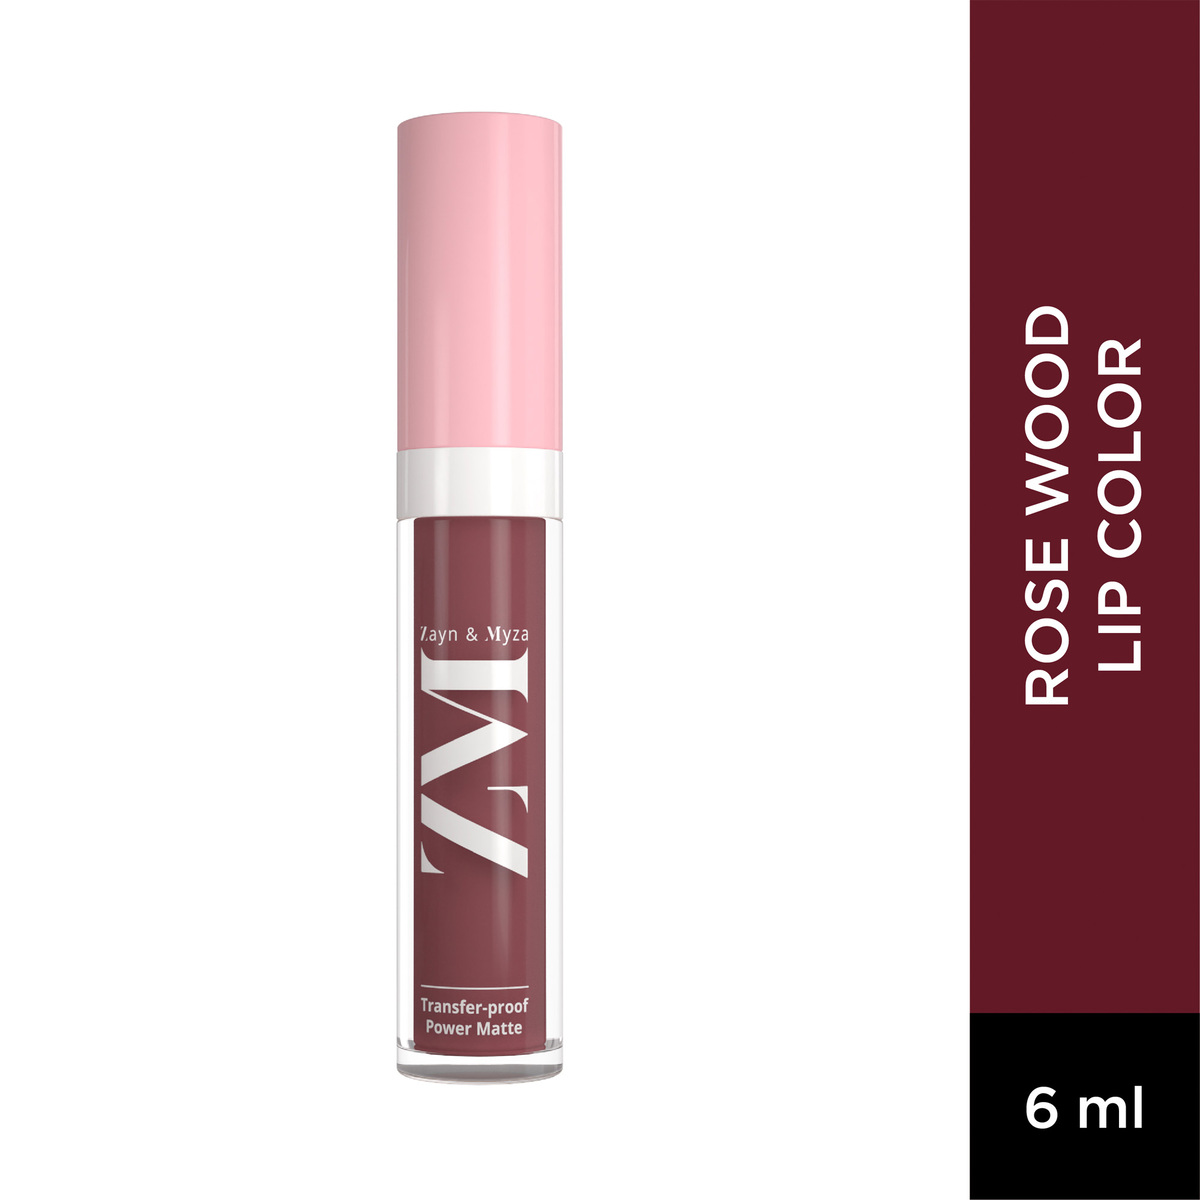 Zayn & Myza Transfer-Proof Power Matte Finish Lip Color, Rose Wood Nude, 6 ml